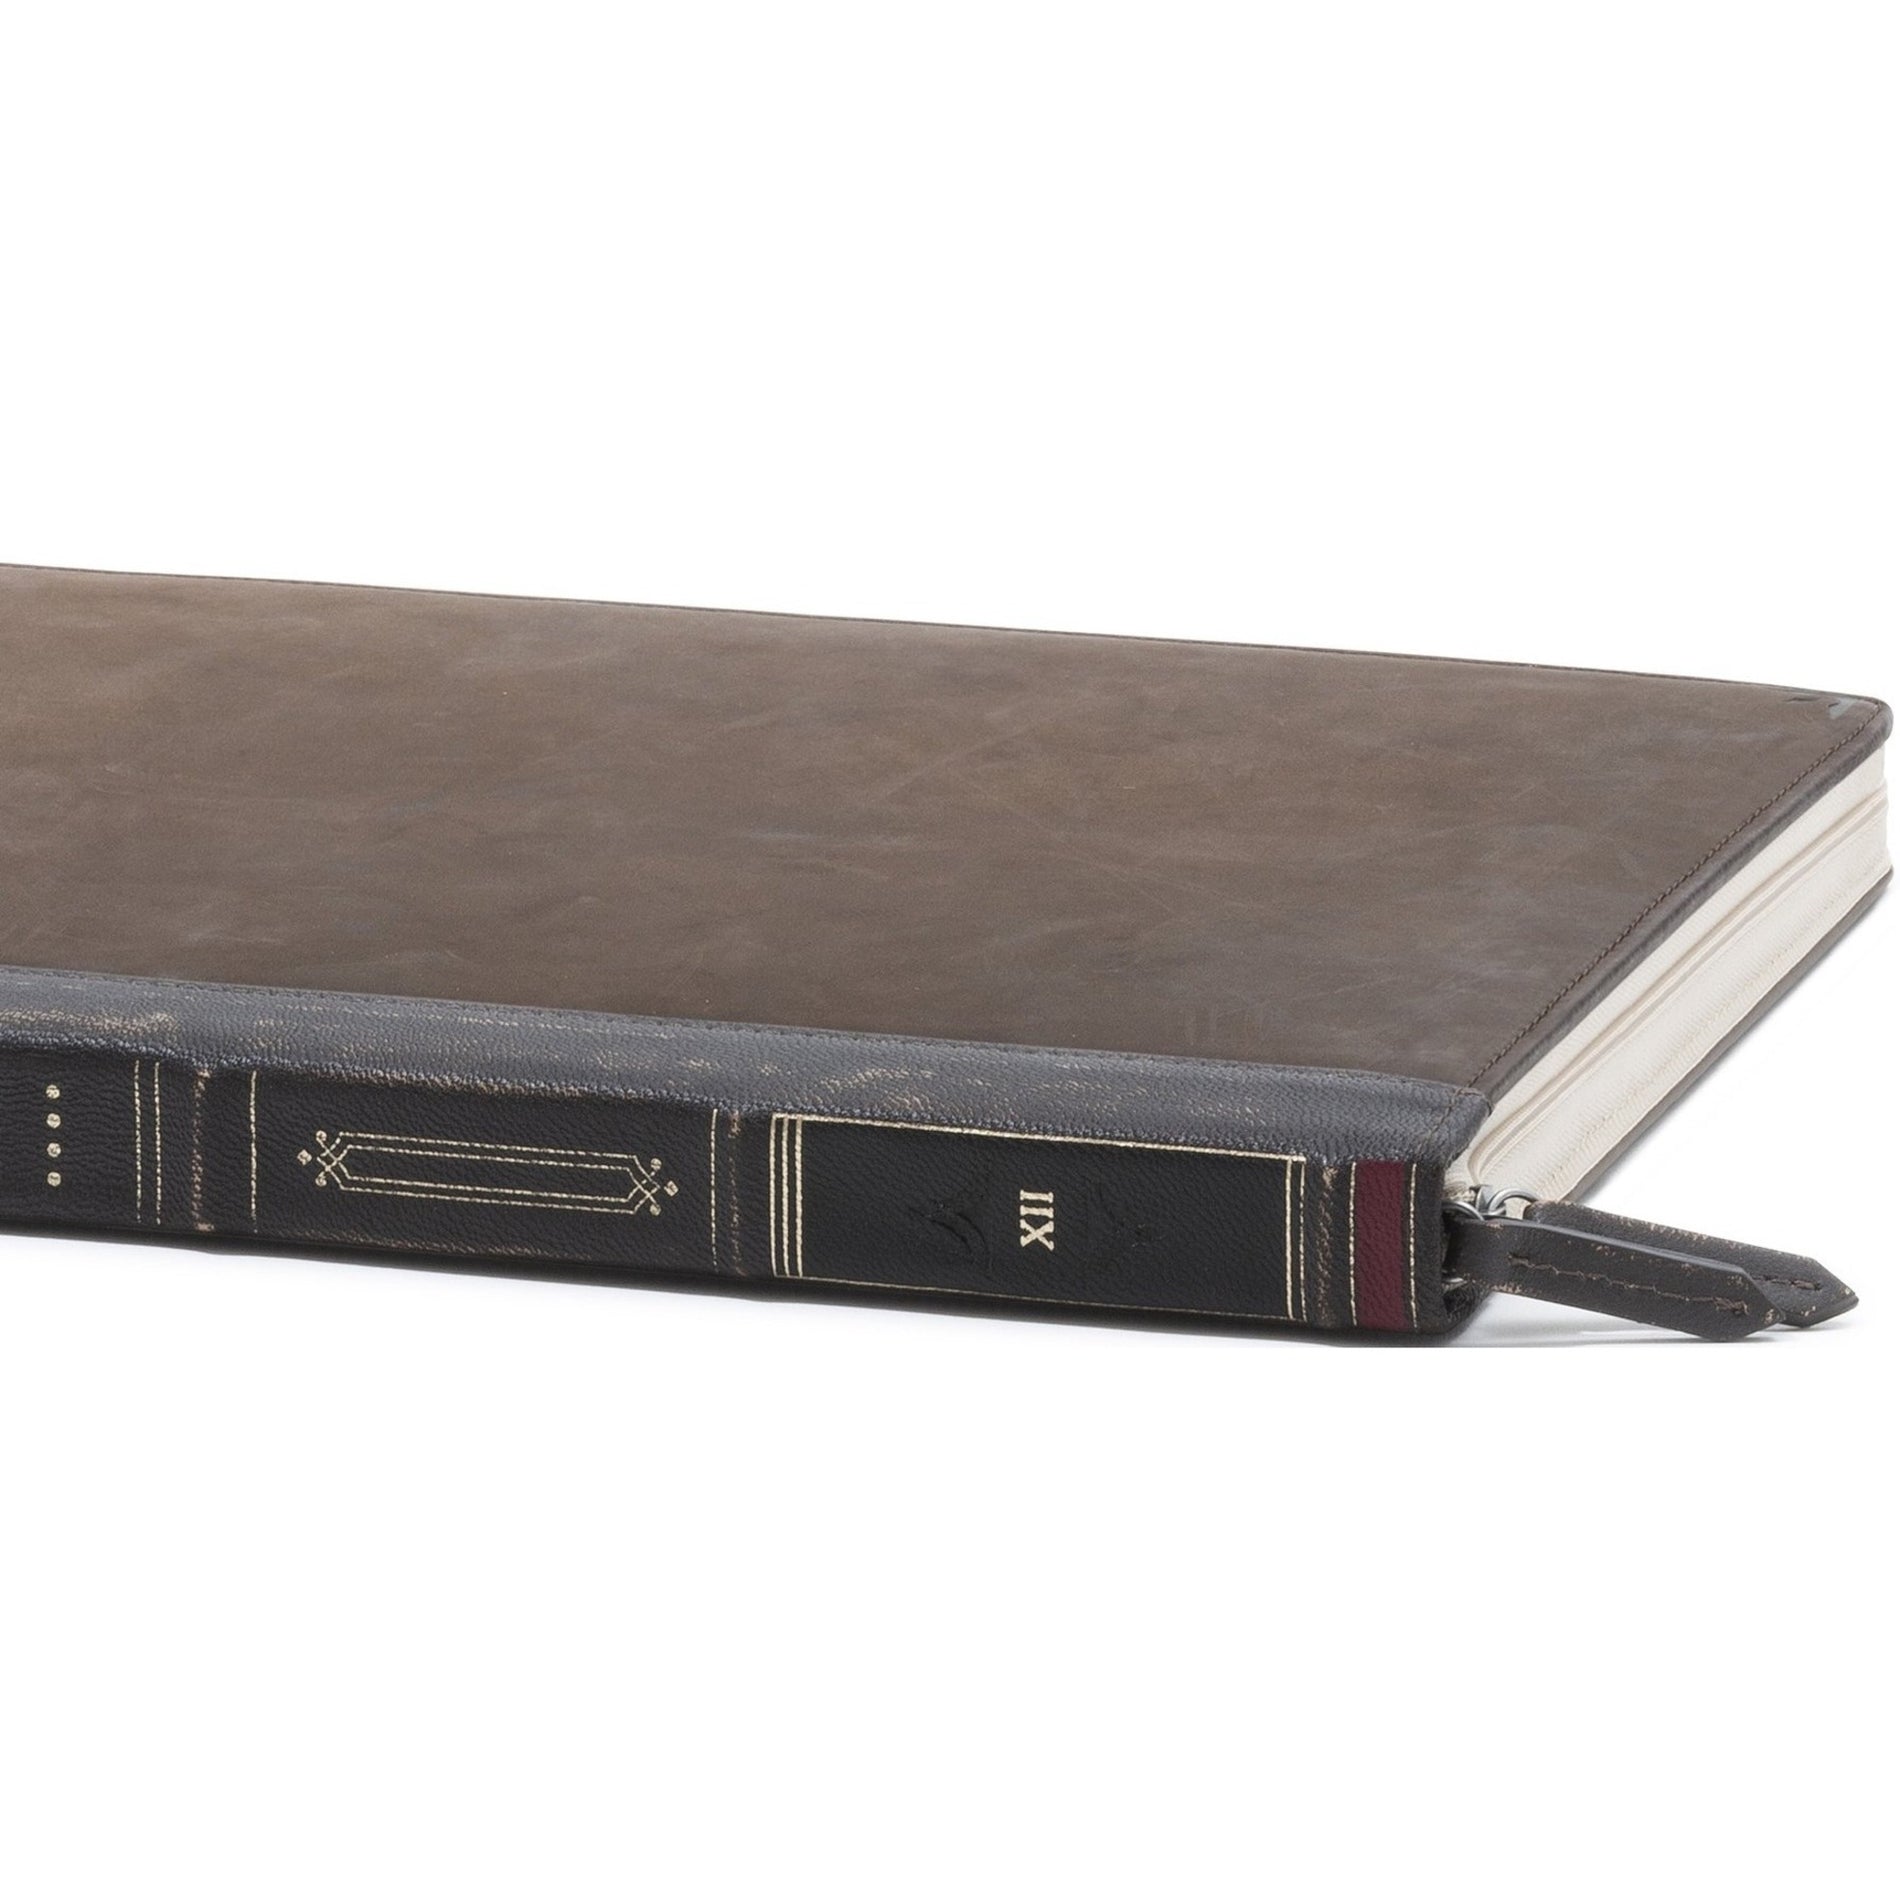 Twelve South 12-2020 BookBook For MacBook, Vintage Brown Genuine Leather Carrying Case